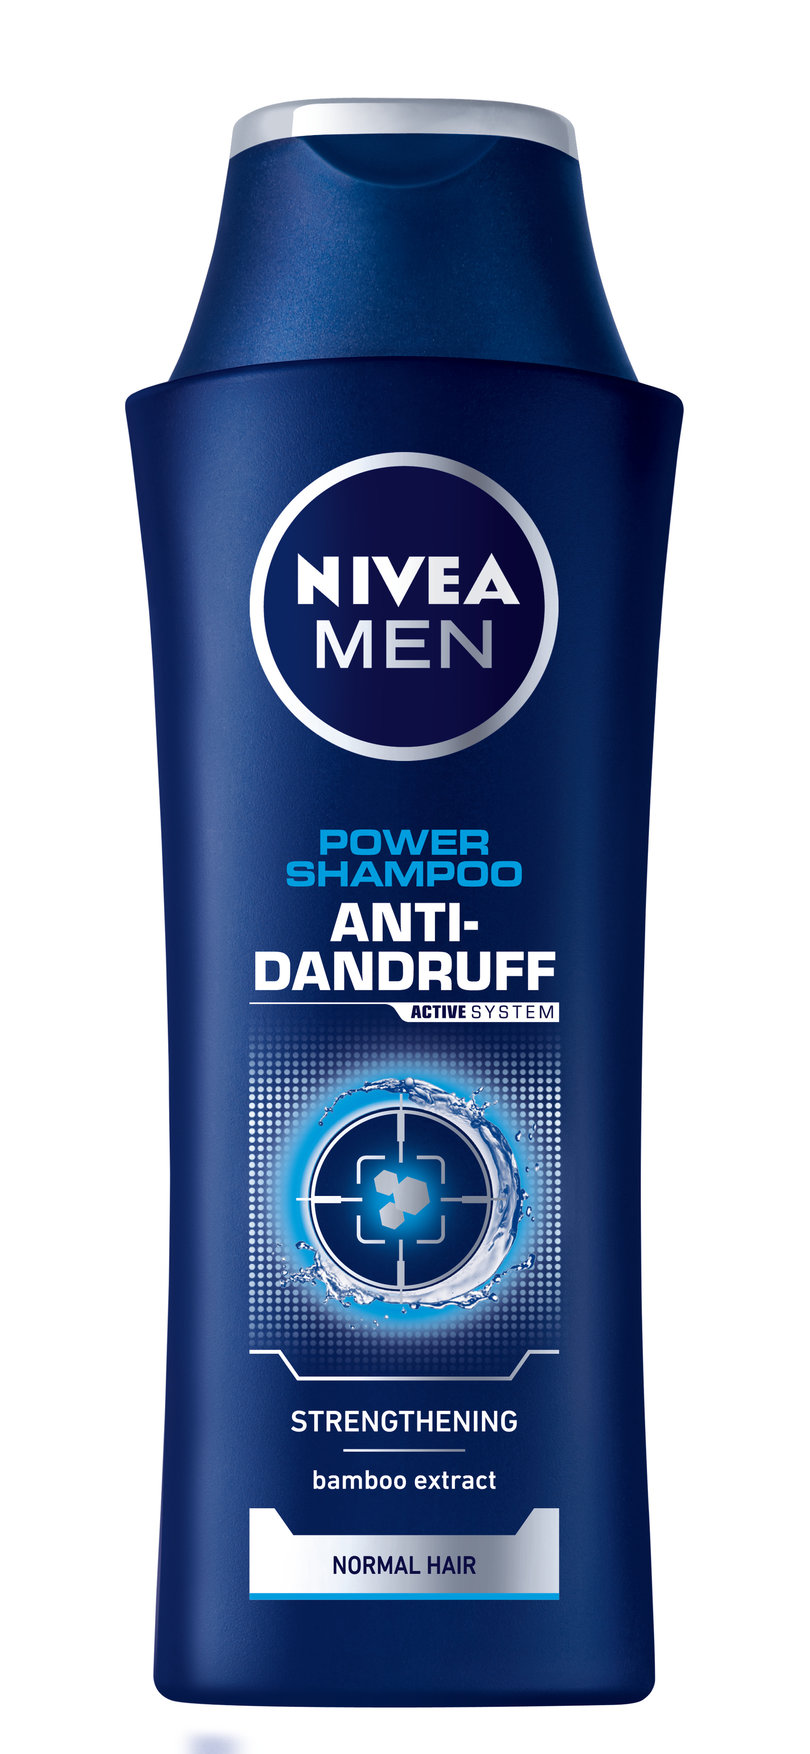 Shampoo Power Nivea Men šamponi protiv peruti